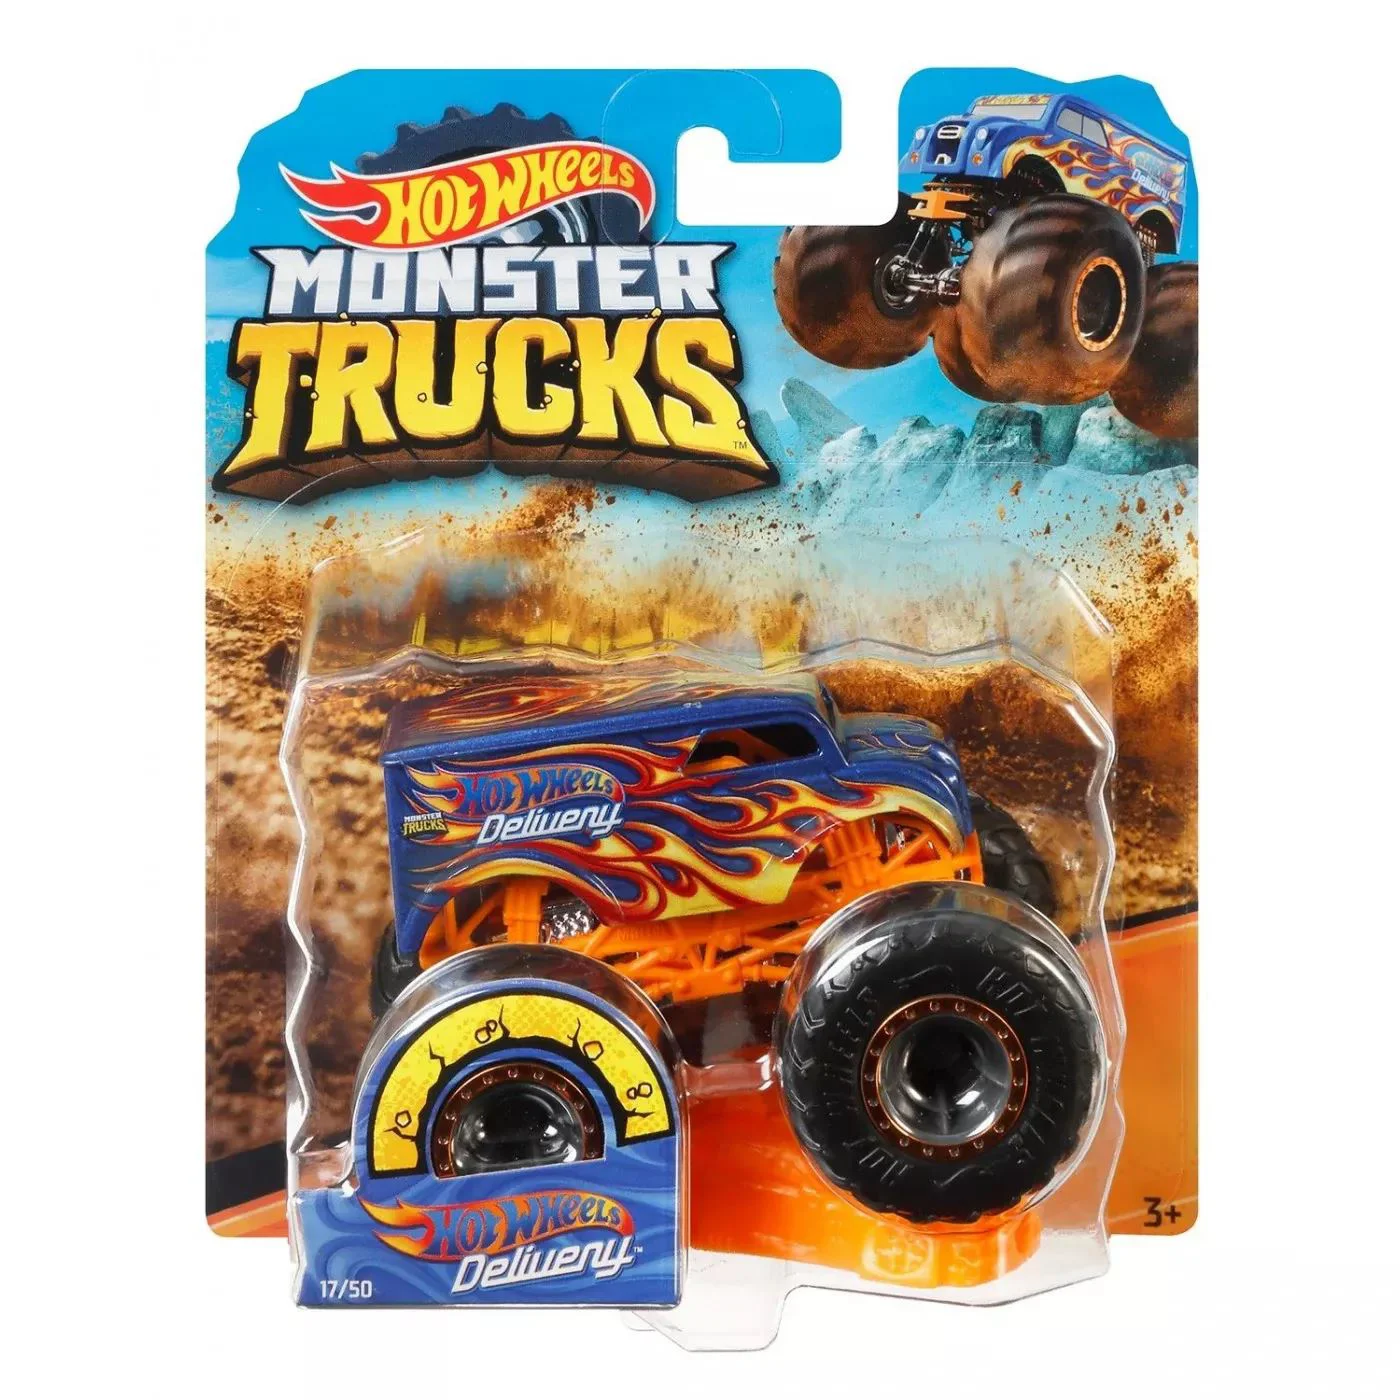 Set de joaca Hot Wheels Monster Trucks, 1:64